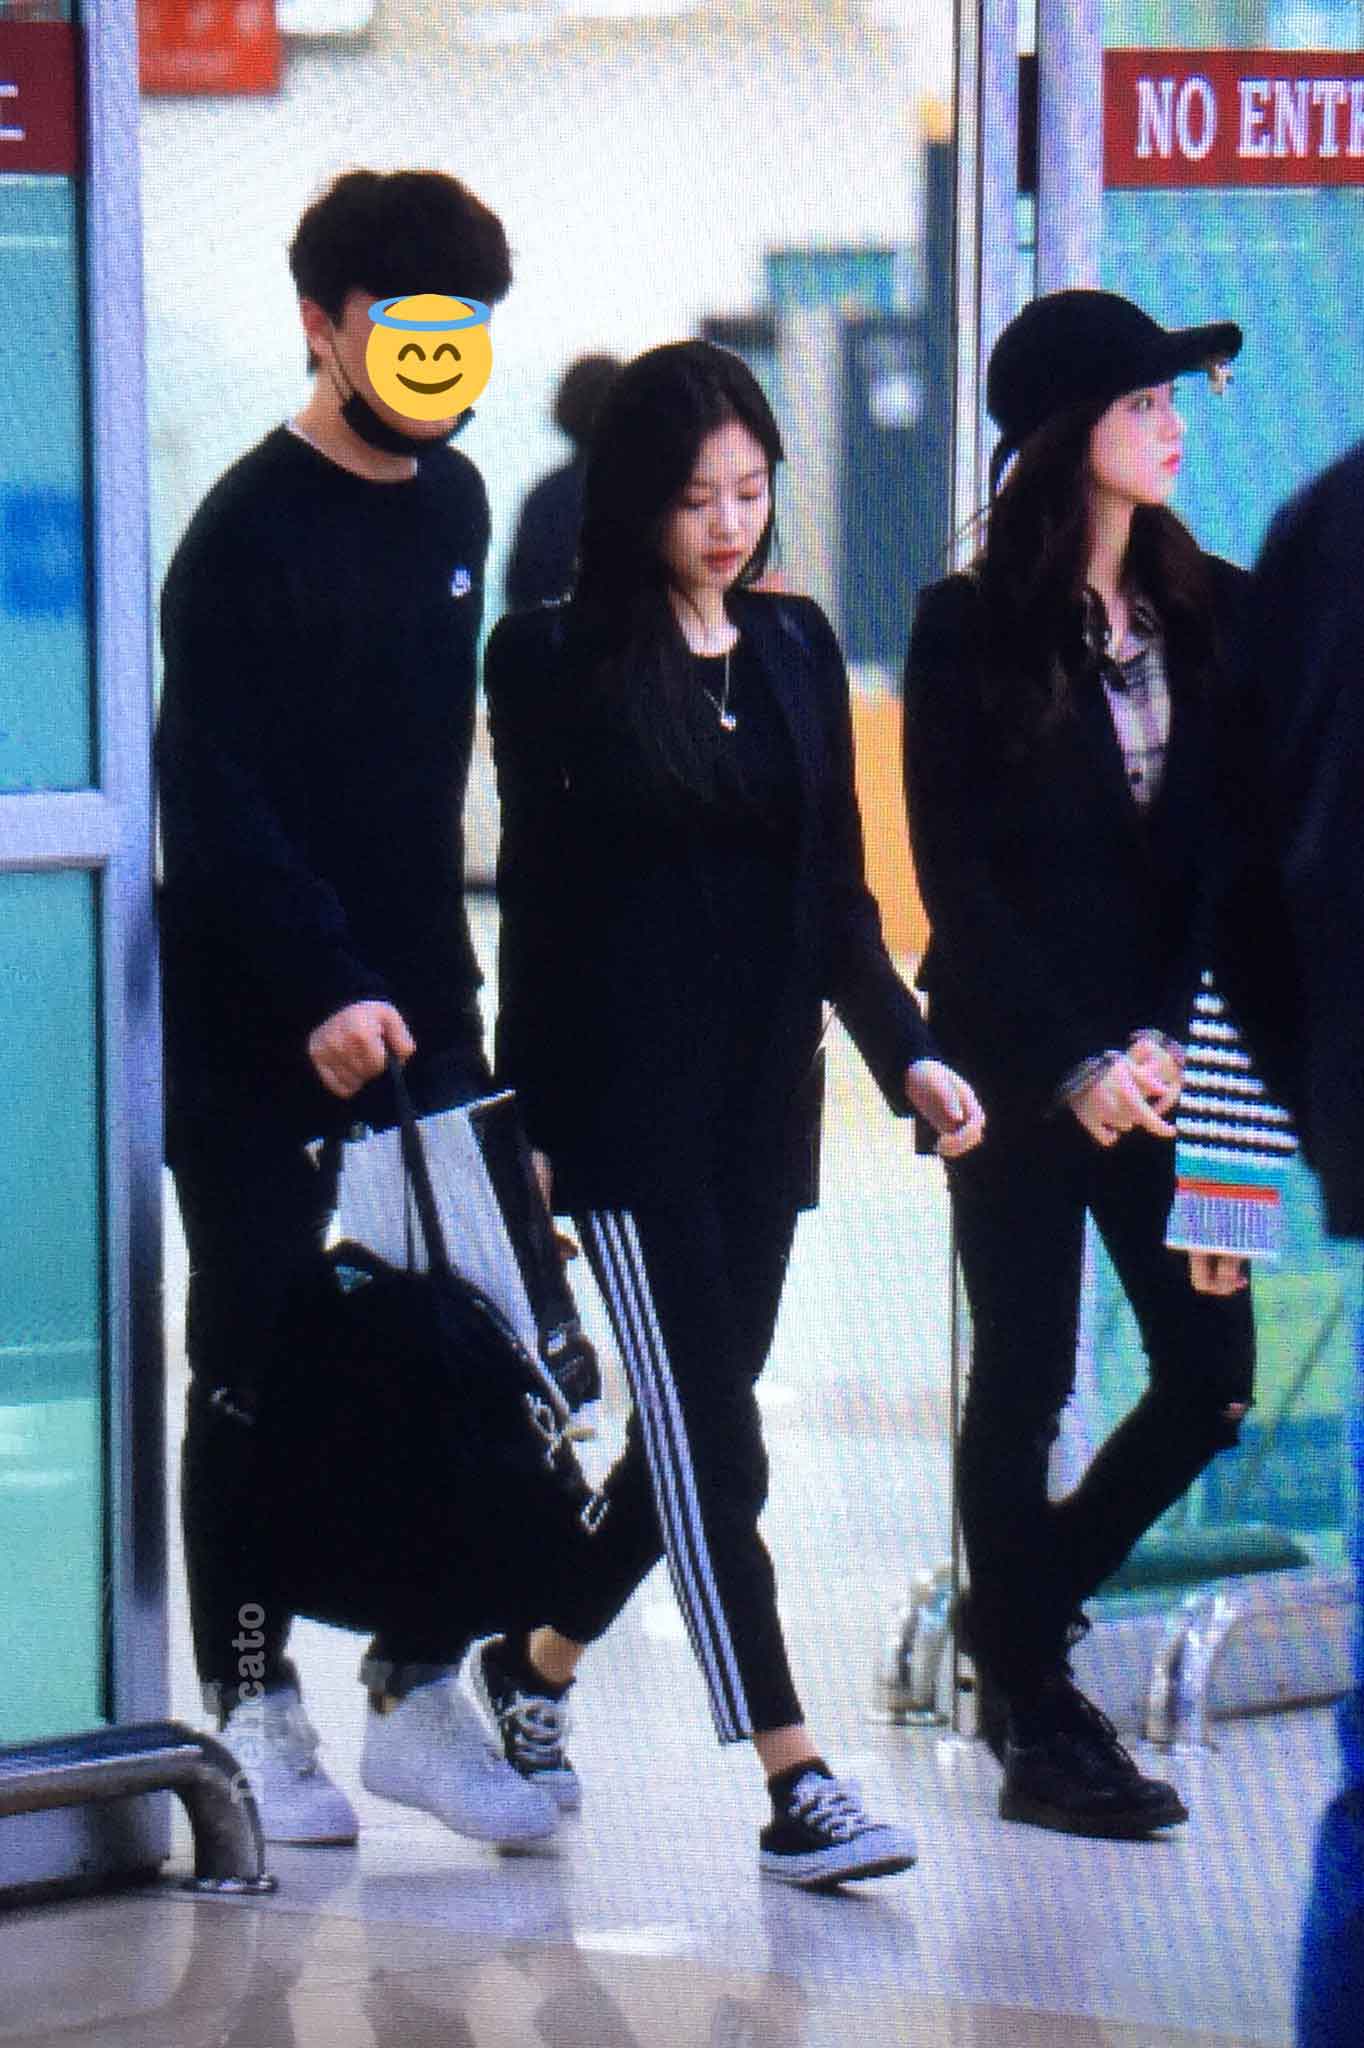 Blackpink Jisoo airport fashion black outfit wear cap hat